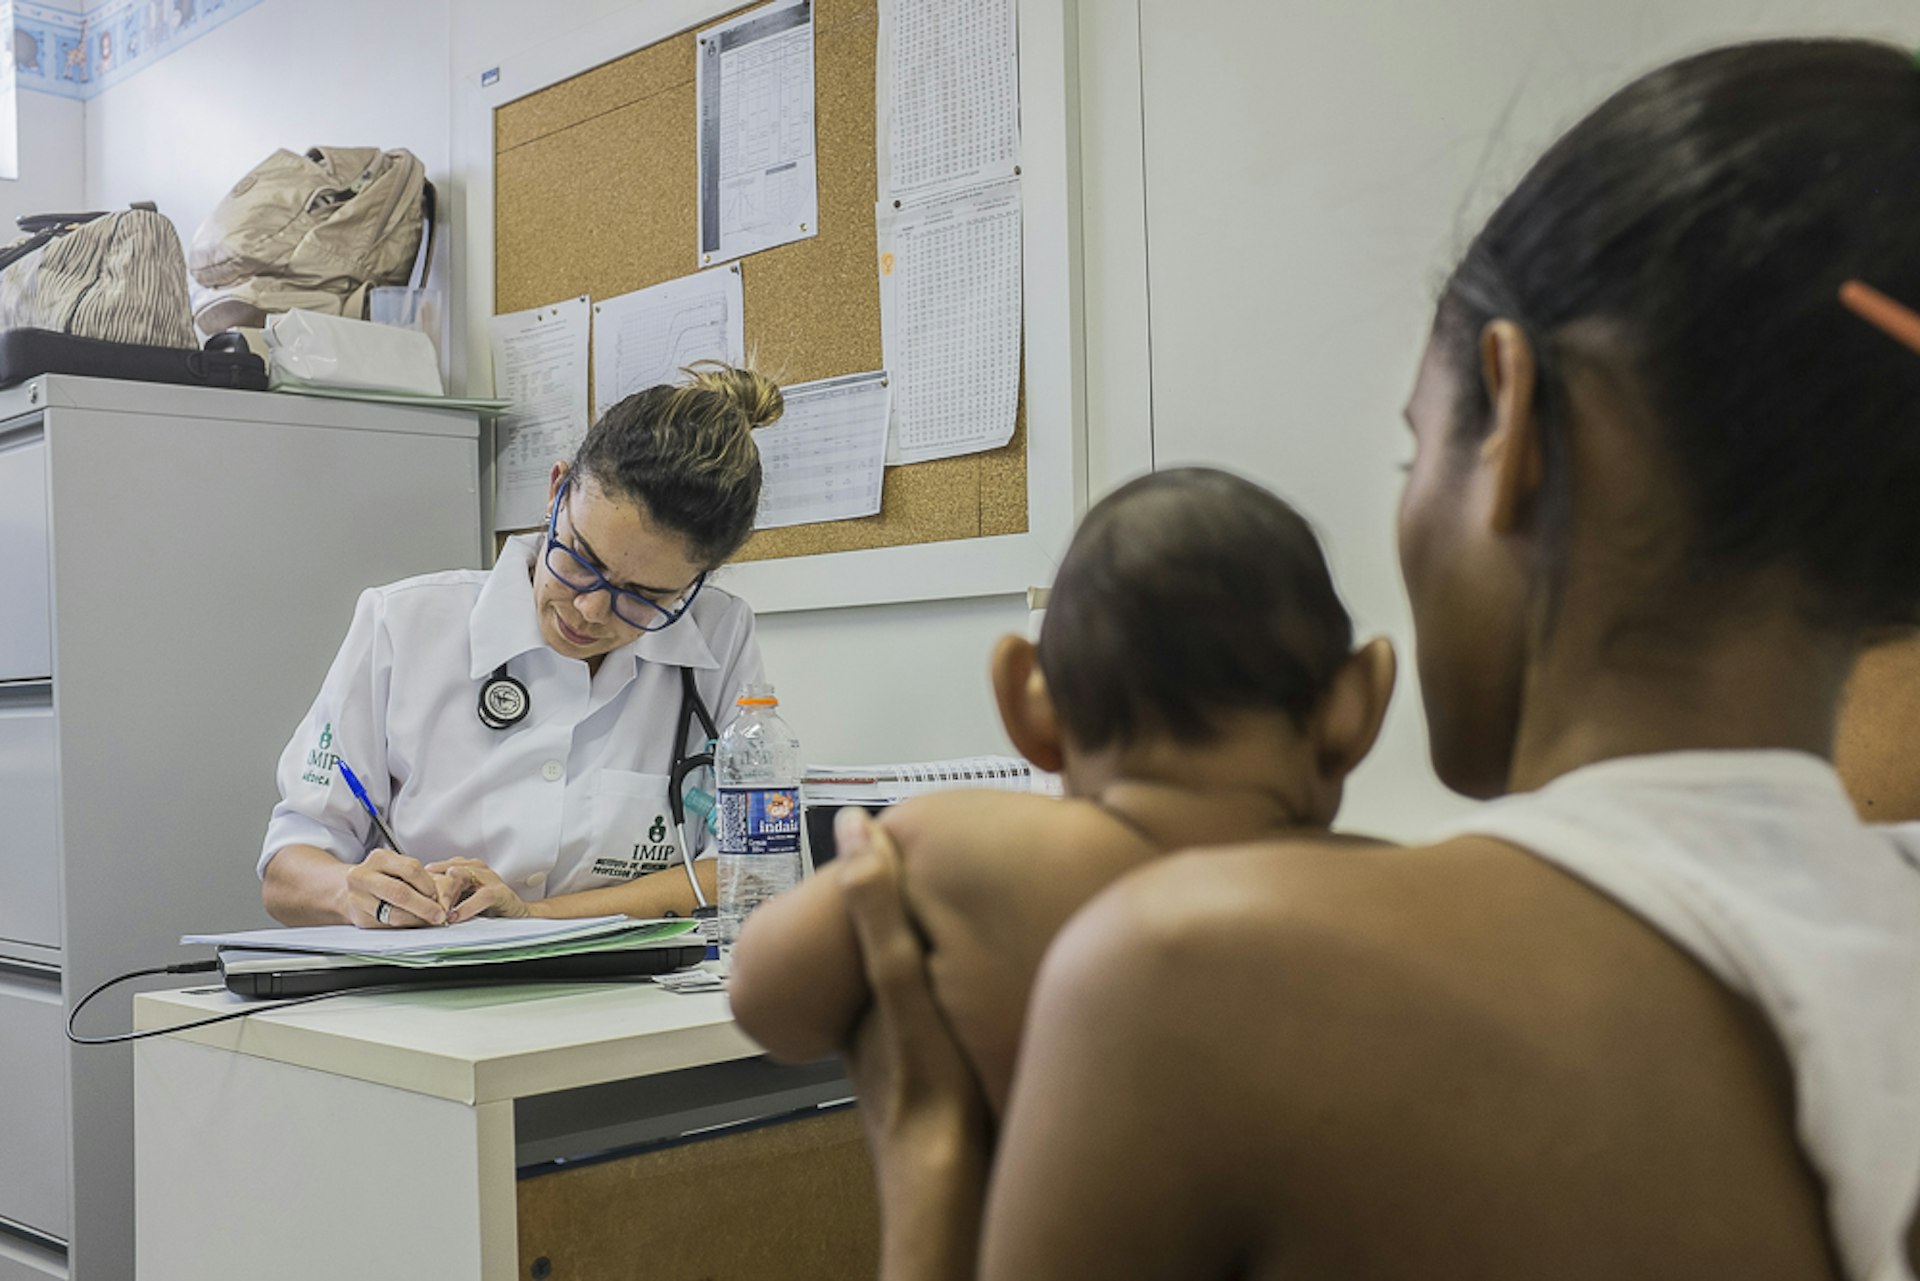 Pediatrician Danielle Cruz examines an infant with microcephaly at the IMIP (Instituto de Medicina Integral Prof. Fernando Figueira) in central Recife, Pernambuco